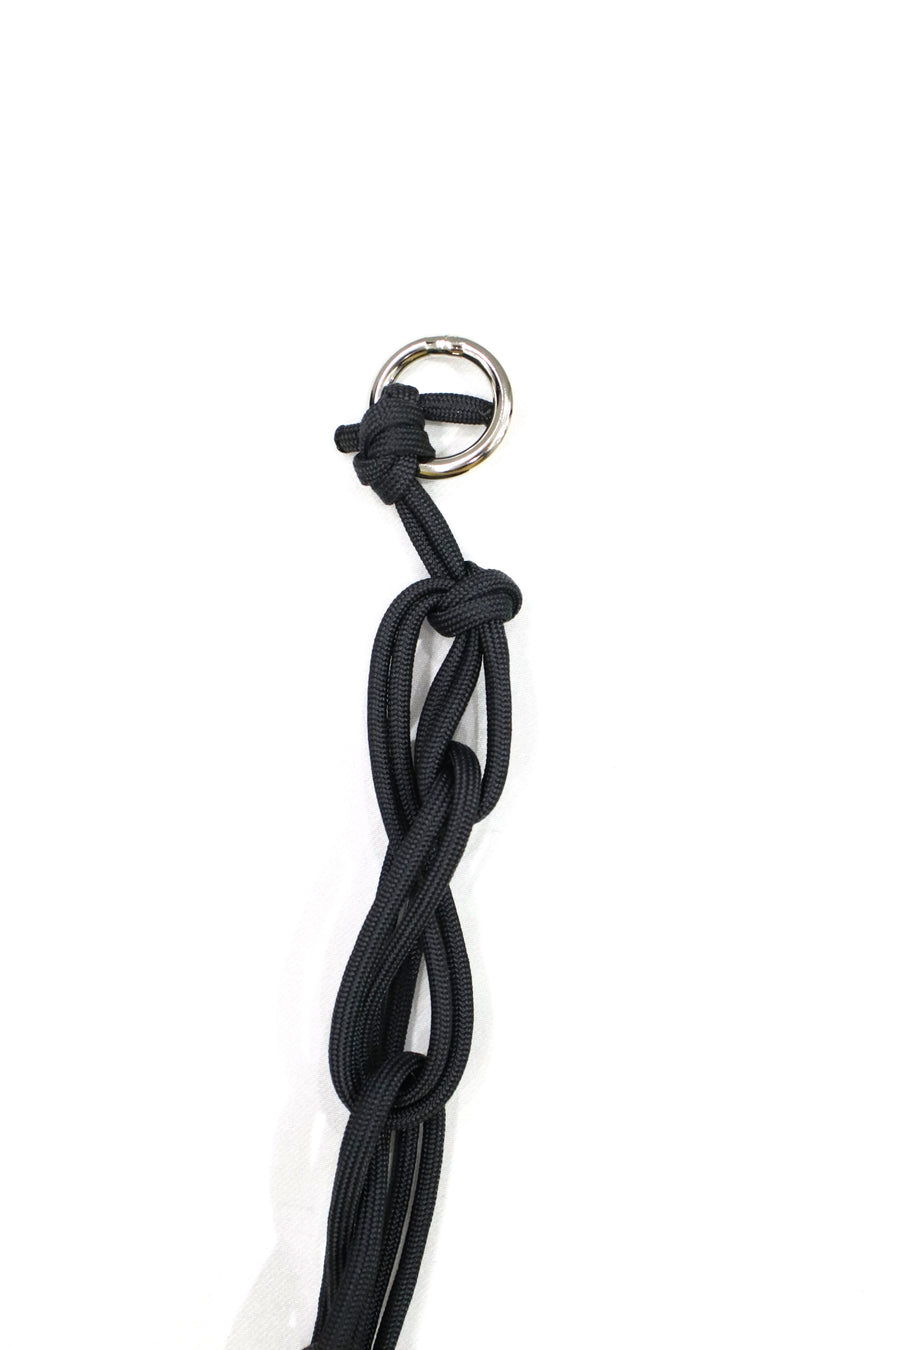 Nulabel's Rope Carabiner Type-1 Black mail order | Palette Art